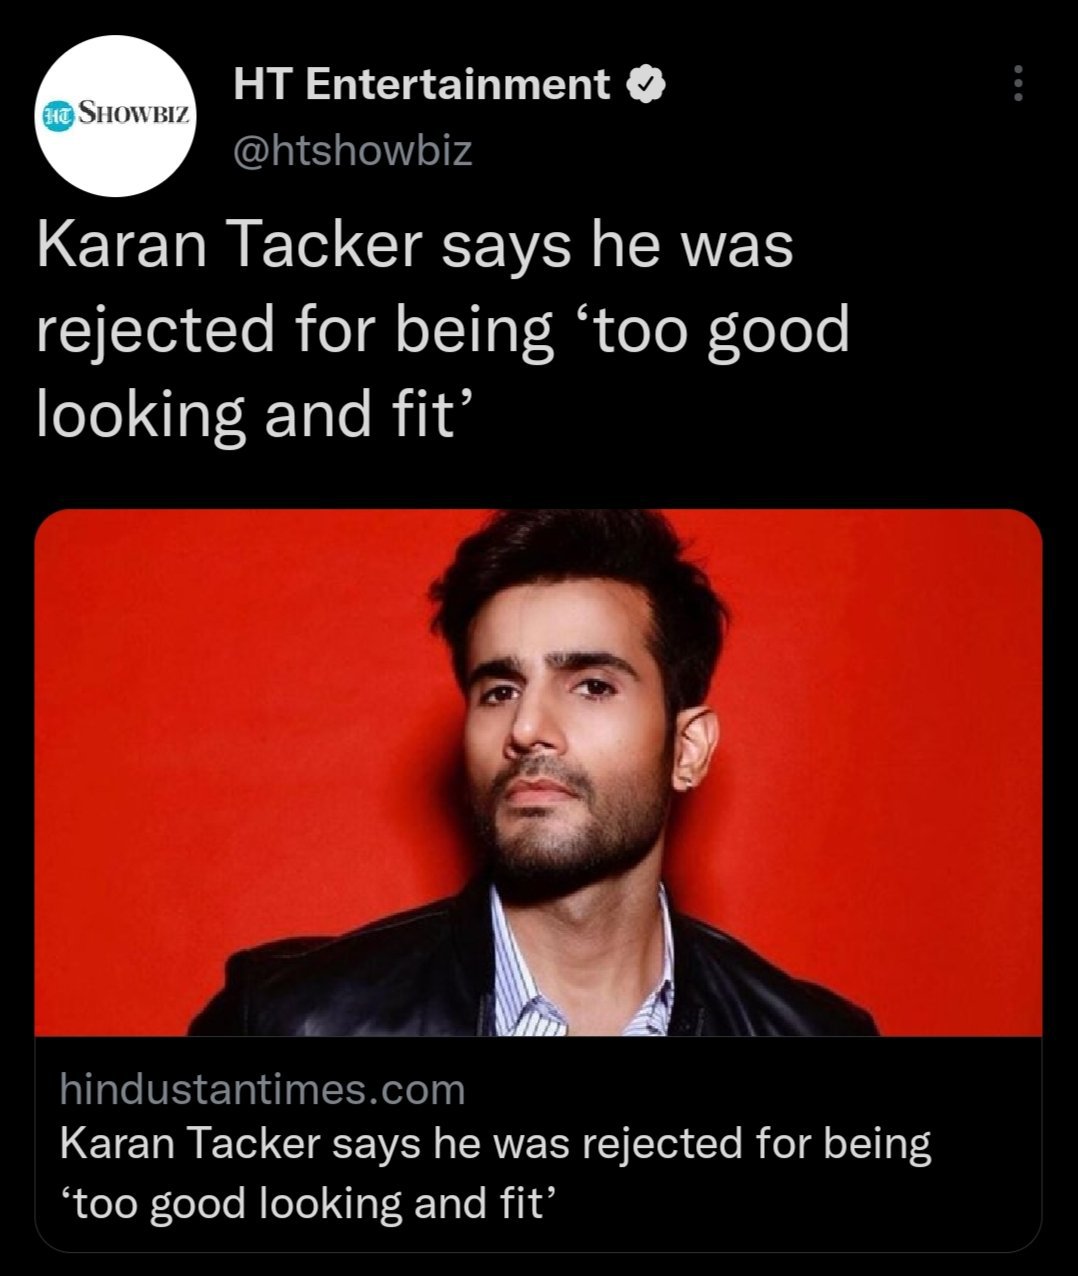 Kriti Sinon Fucking - Kriti Sanon To Gauhar Khan, Bollywood Actors Get Trolled For Claiming Good  Lucks Held Them Back